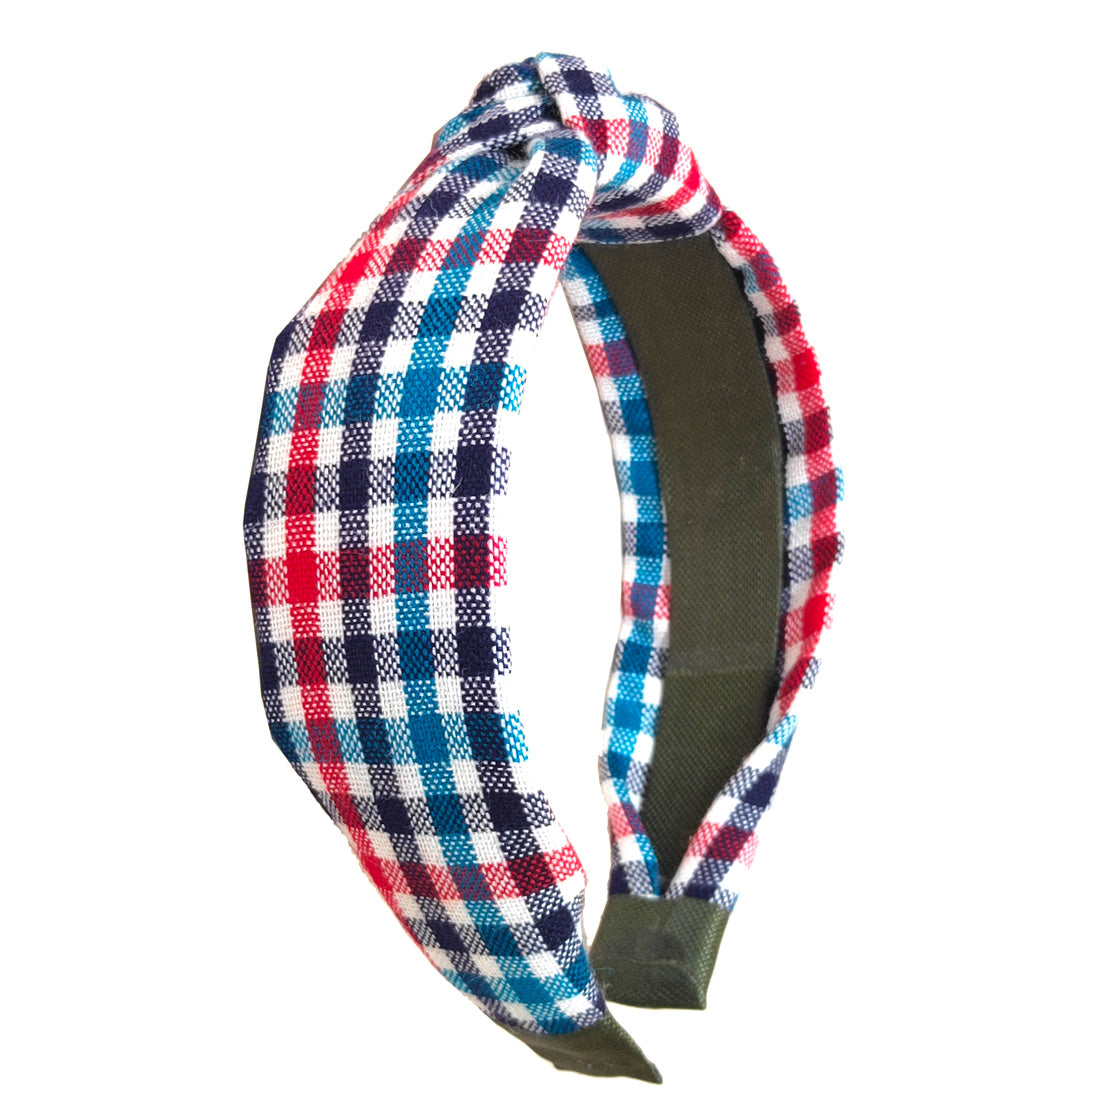 Anokhi Ada Handmade Multi-colour Check Design Fabric Knot Hairband/Headband for Girls and Women -14-14H